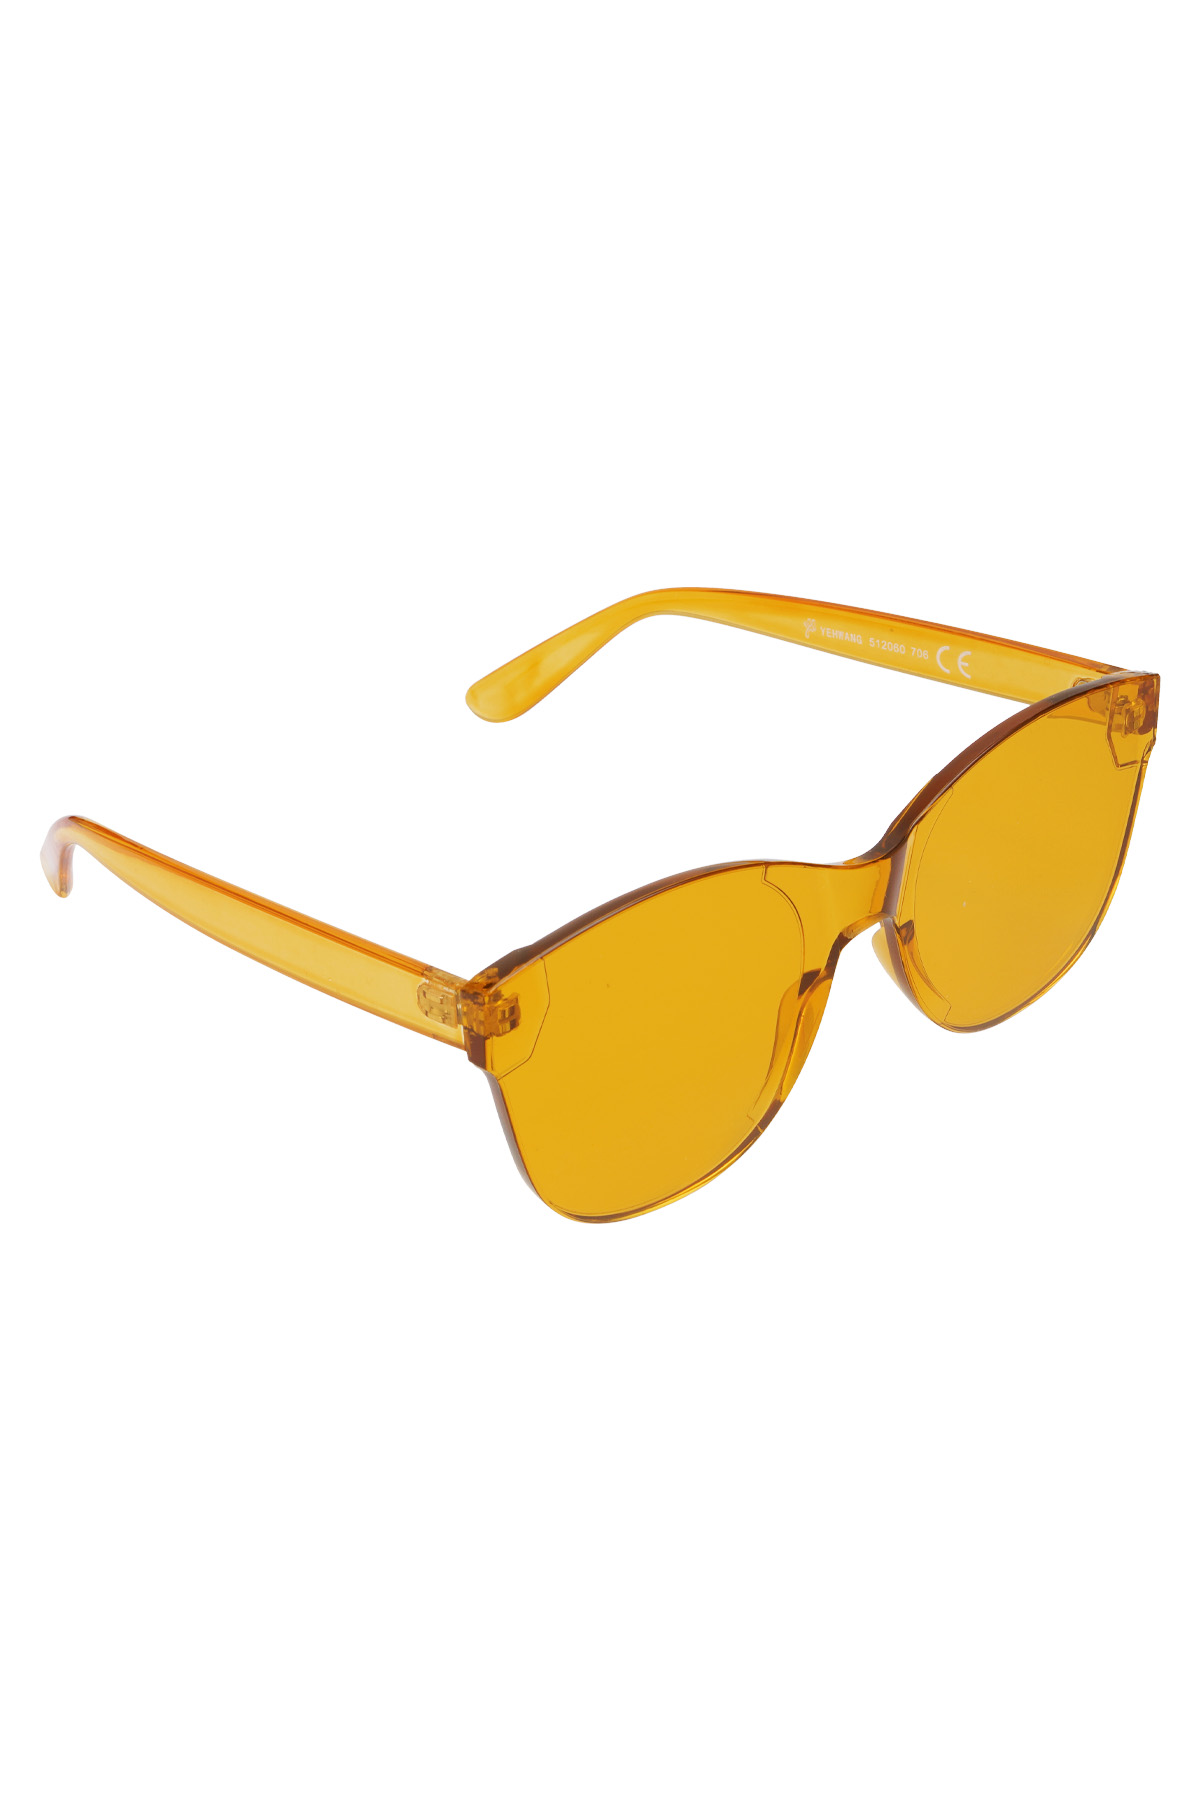 Single-color trendy sunglasses - orange